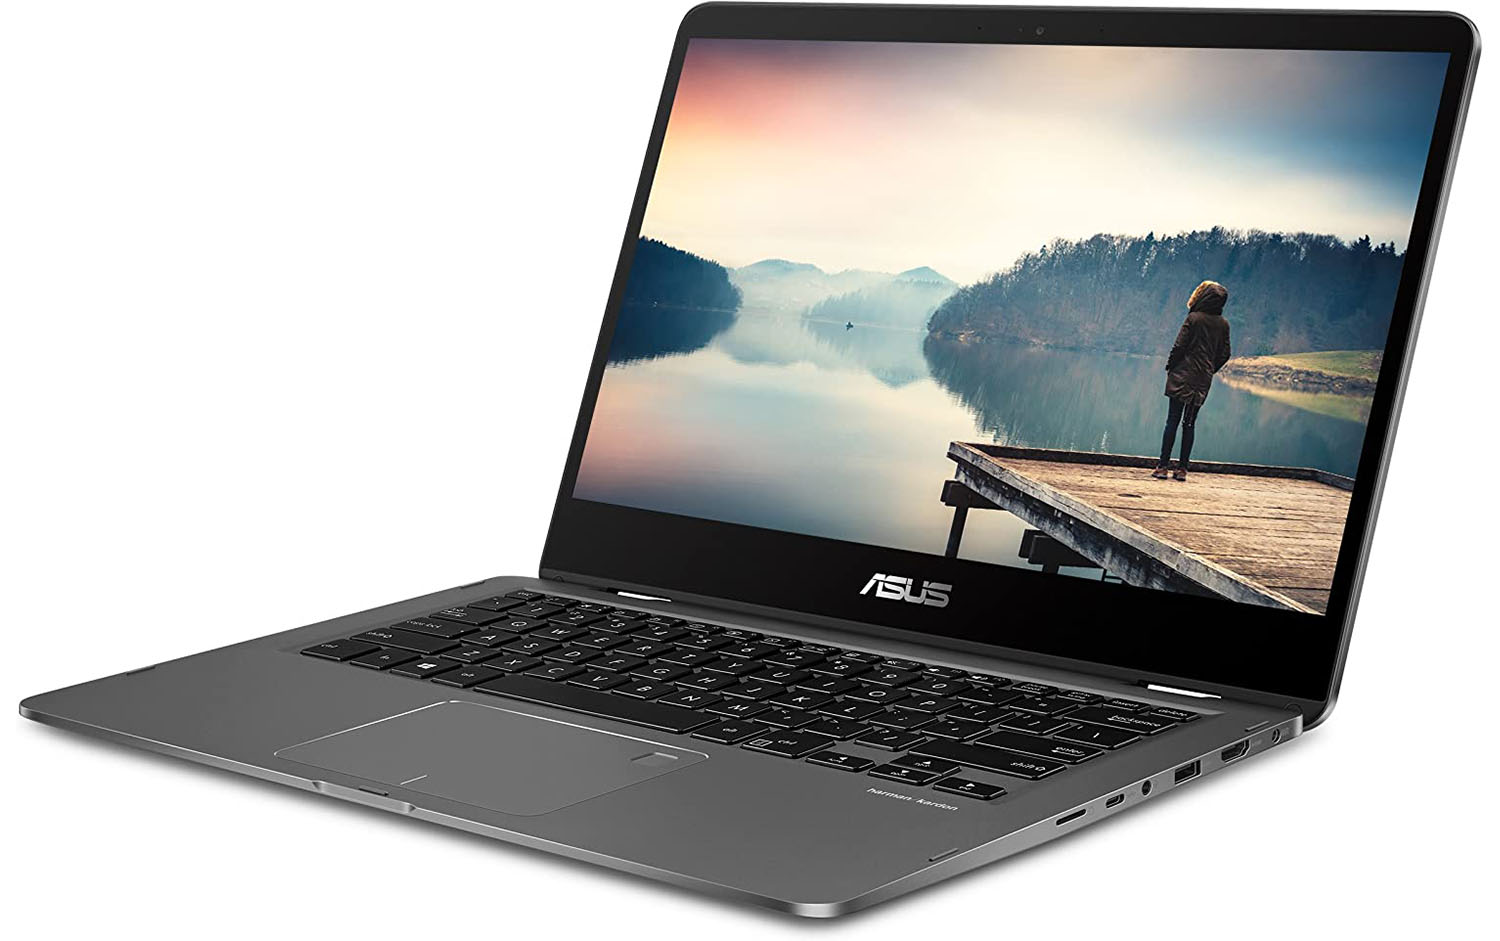 ASUS ZenBook Flip 14 Intel Core i5 8th Gen 8GB RAM 256GB SSD Touchscreen Windows 10 Home